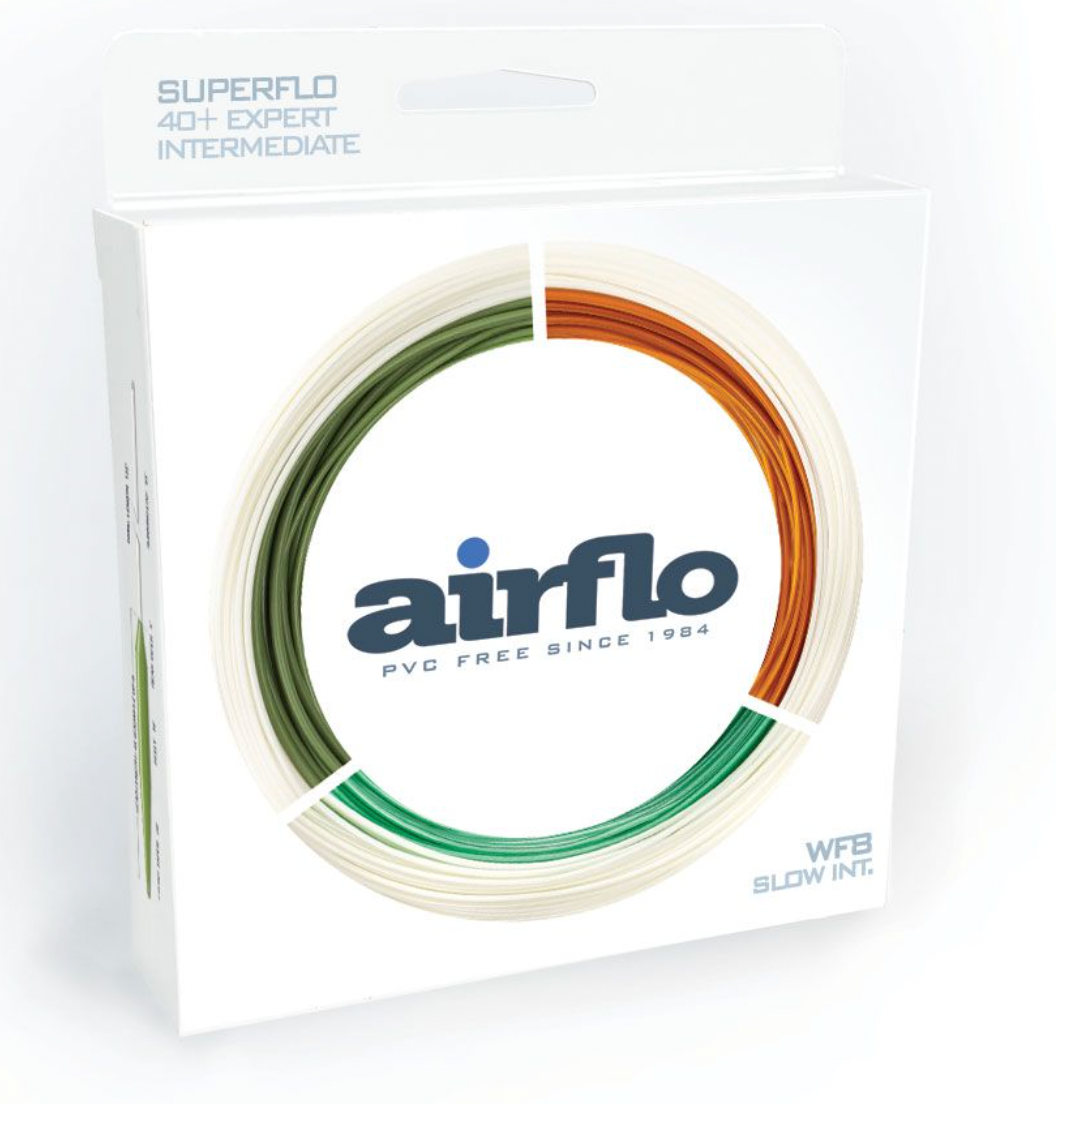 Airflo Superflo 40+ expert SINK